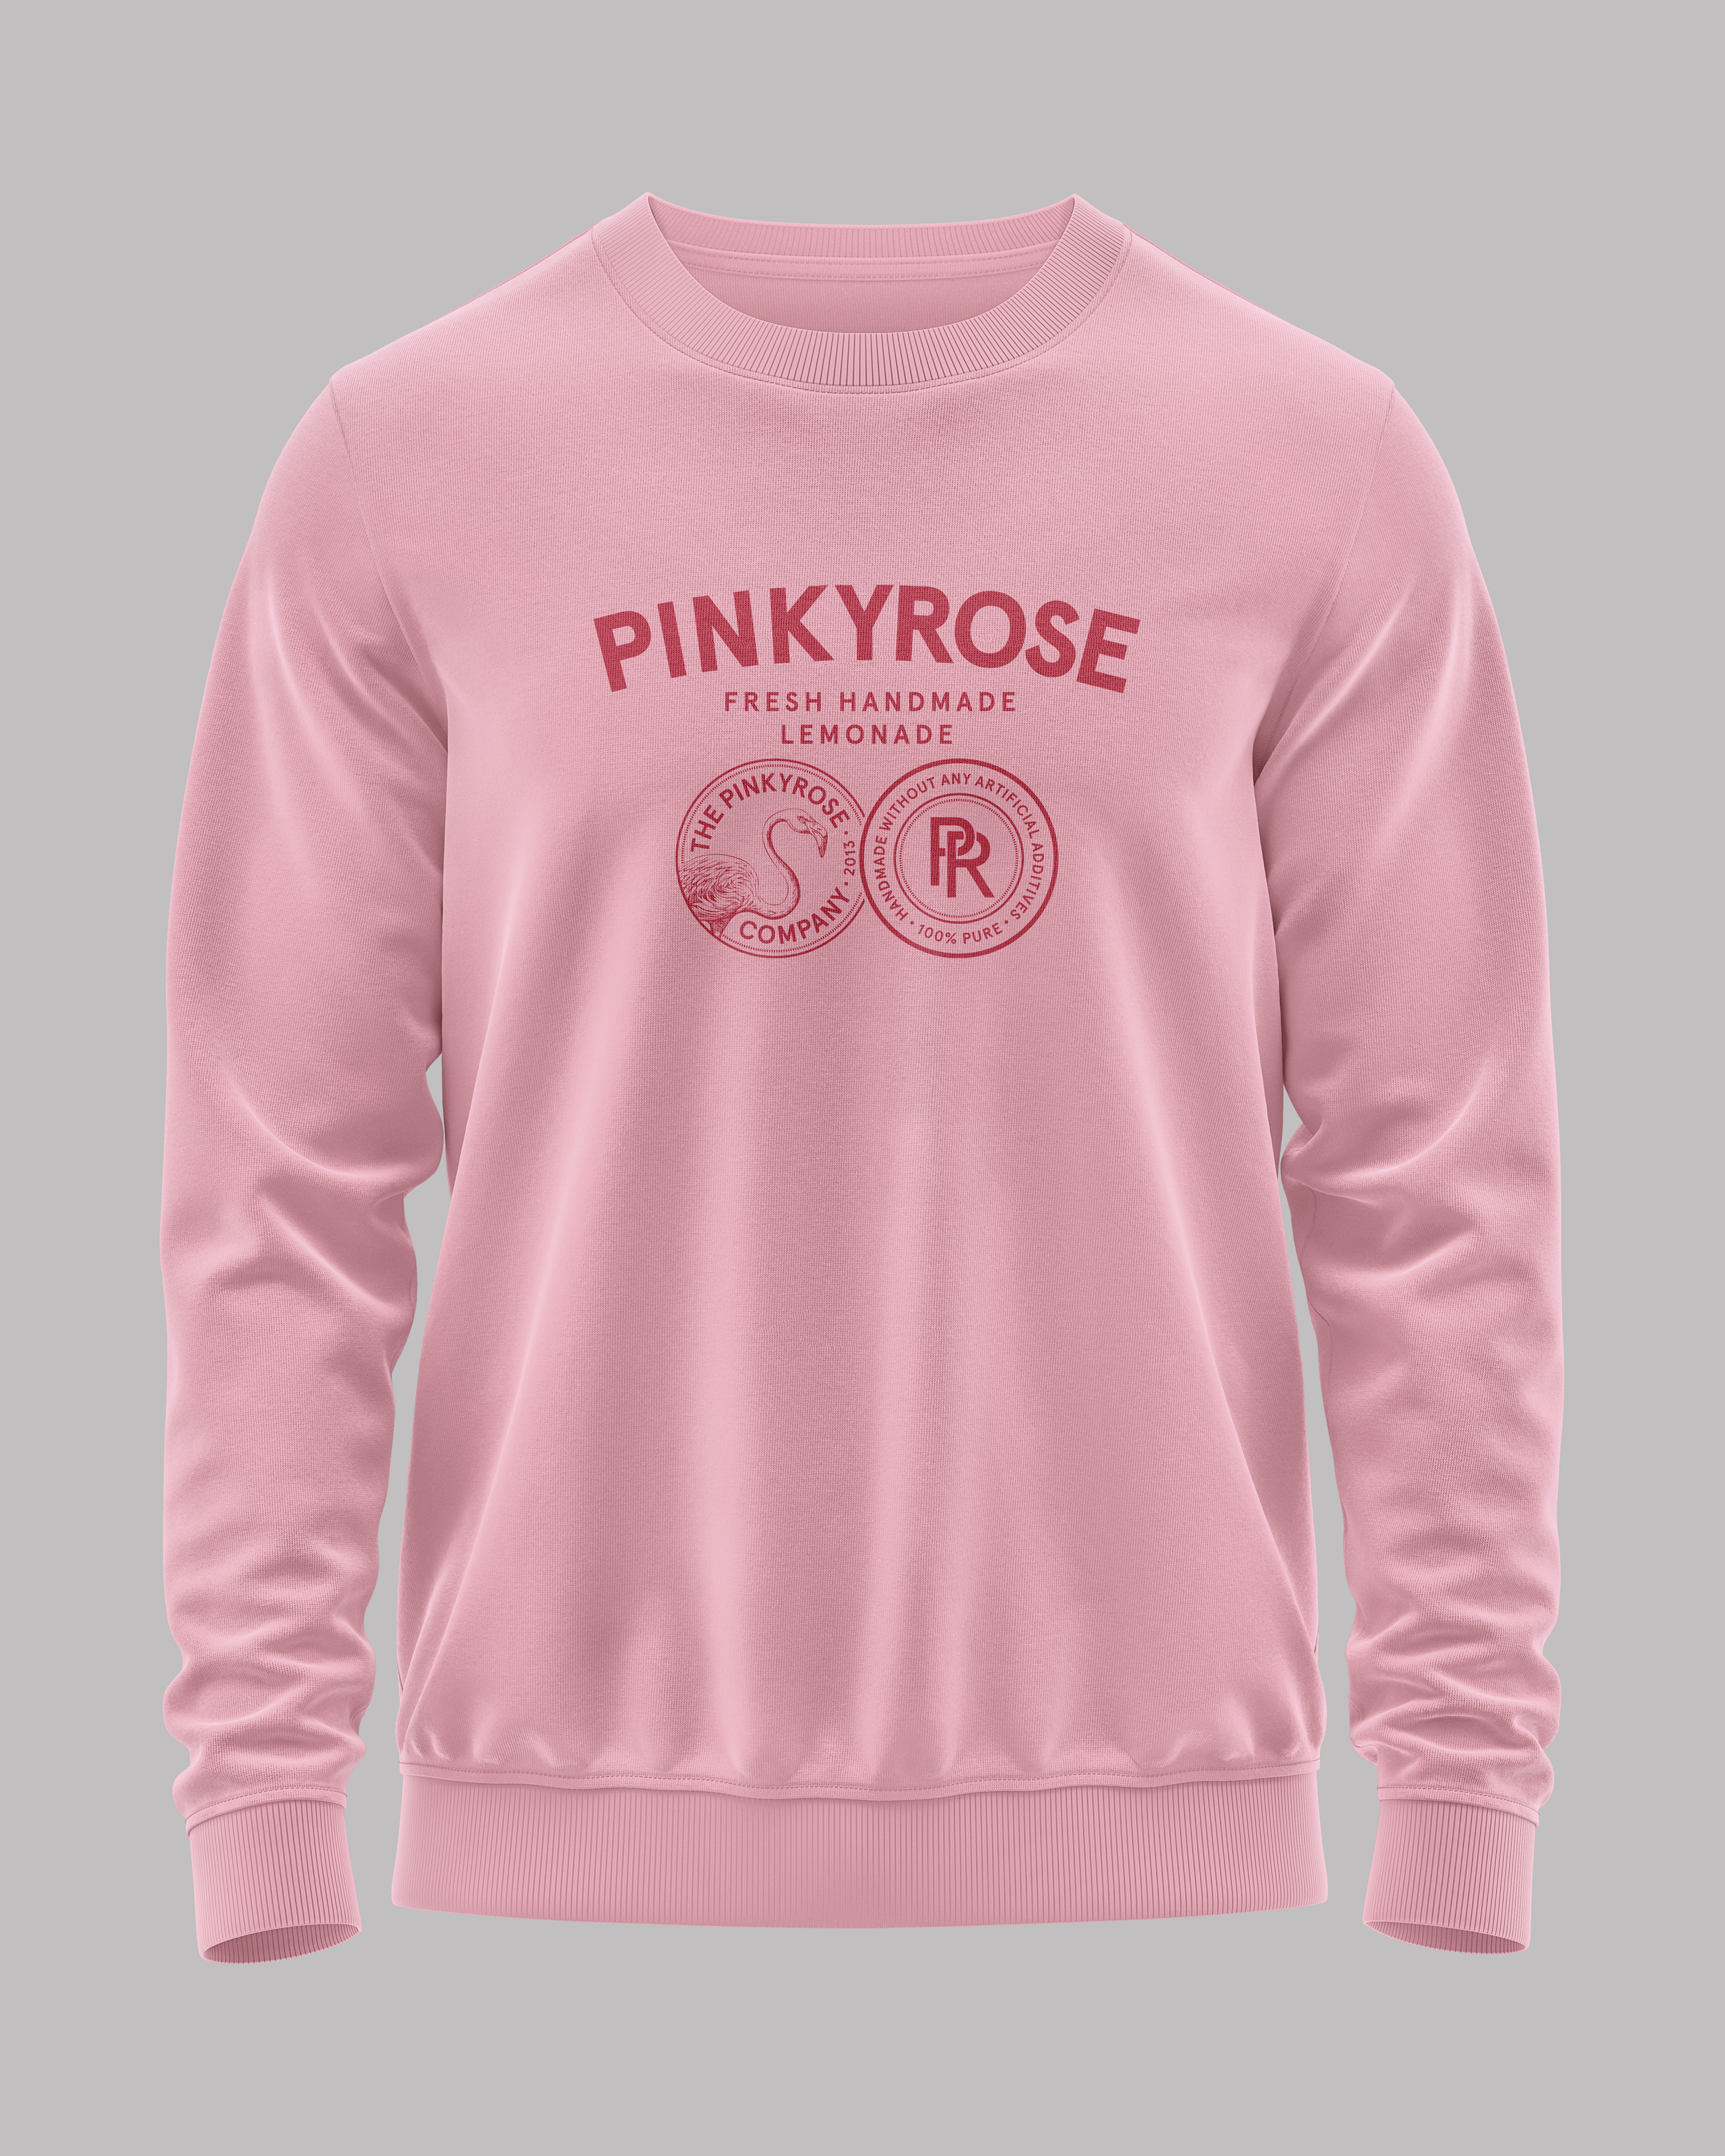 Pinkyrose sweatshirt in soft pink – Pinkyrose: Gastronomic fresh handmade  lemonade syrups